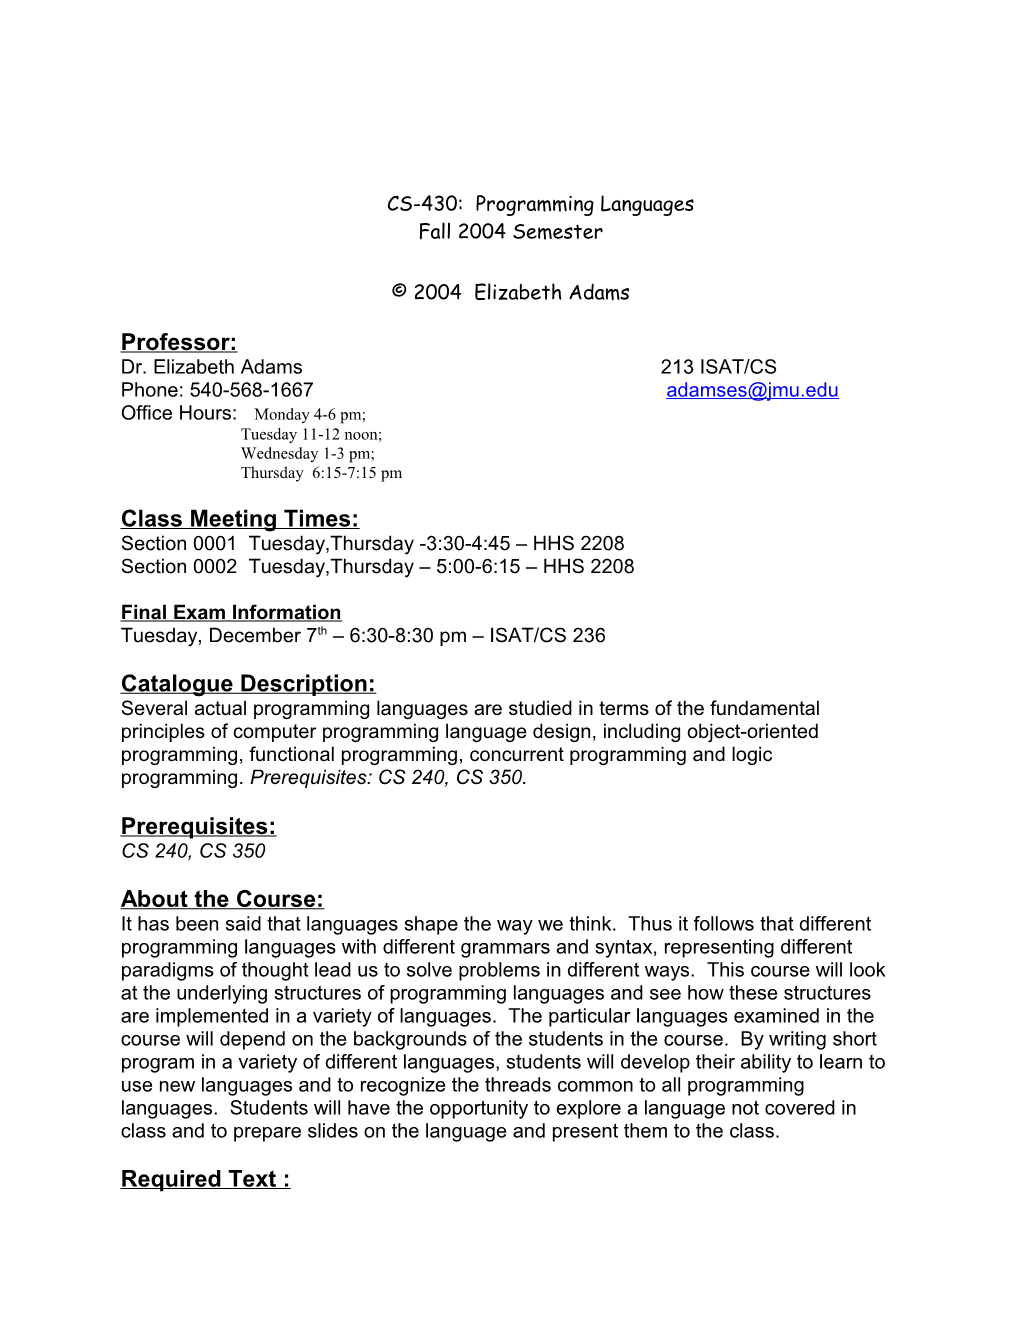 CS-430: Programming Languages Fall 2004 Semester